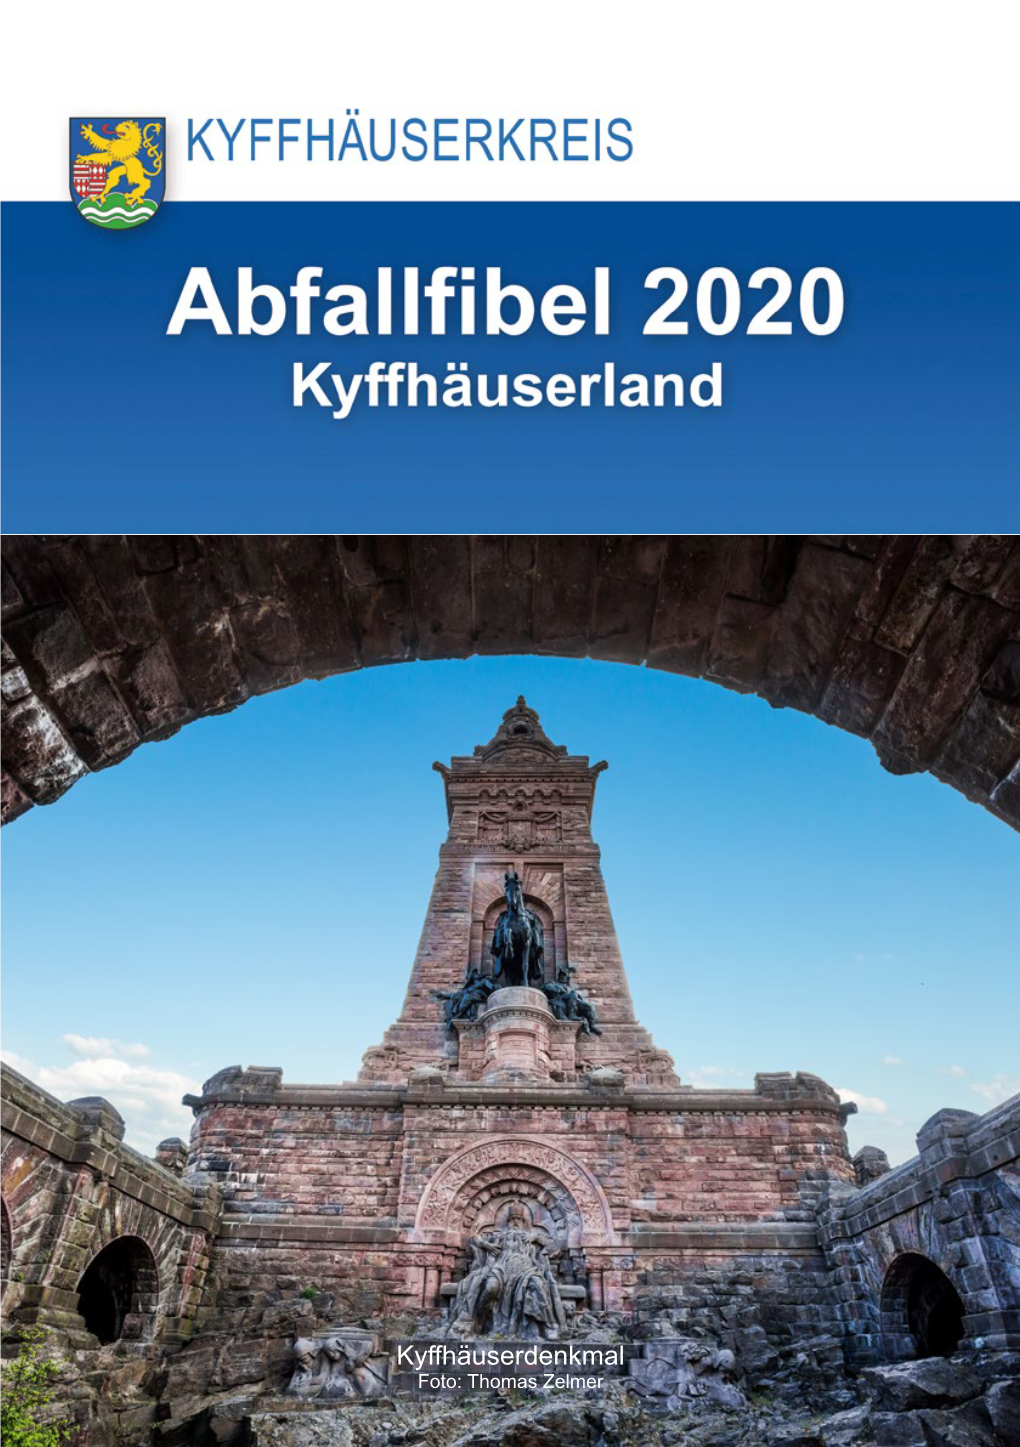 Abfallfibel-Kyffhuserland.Pdf